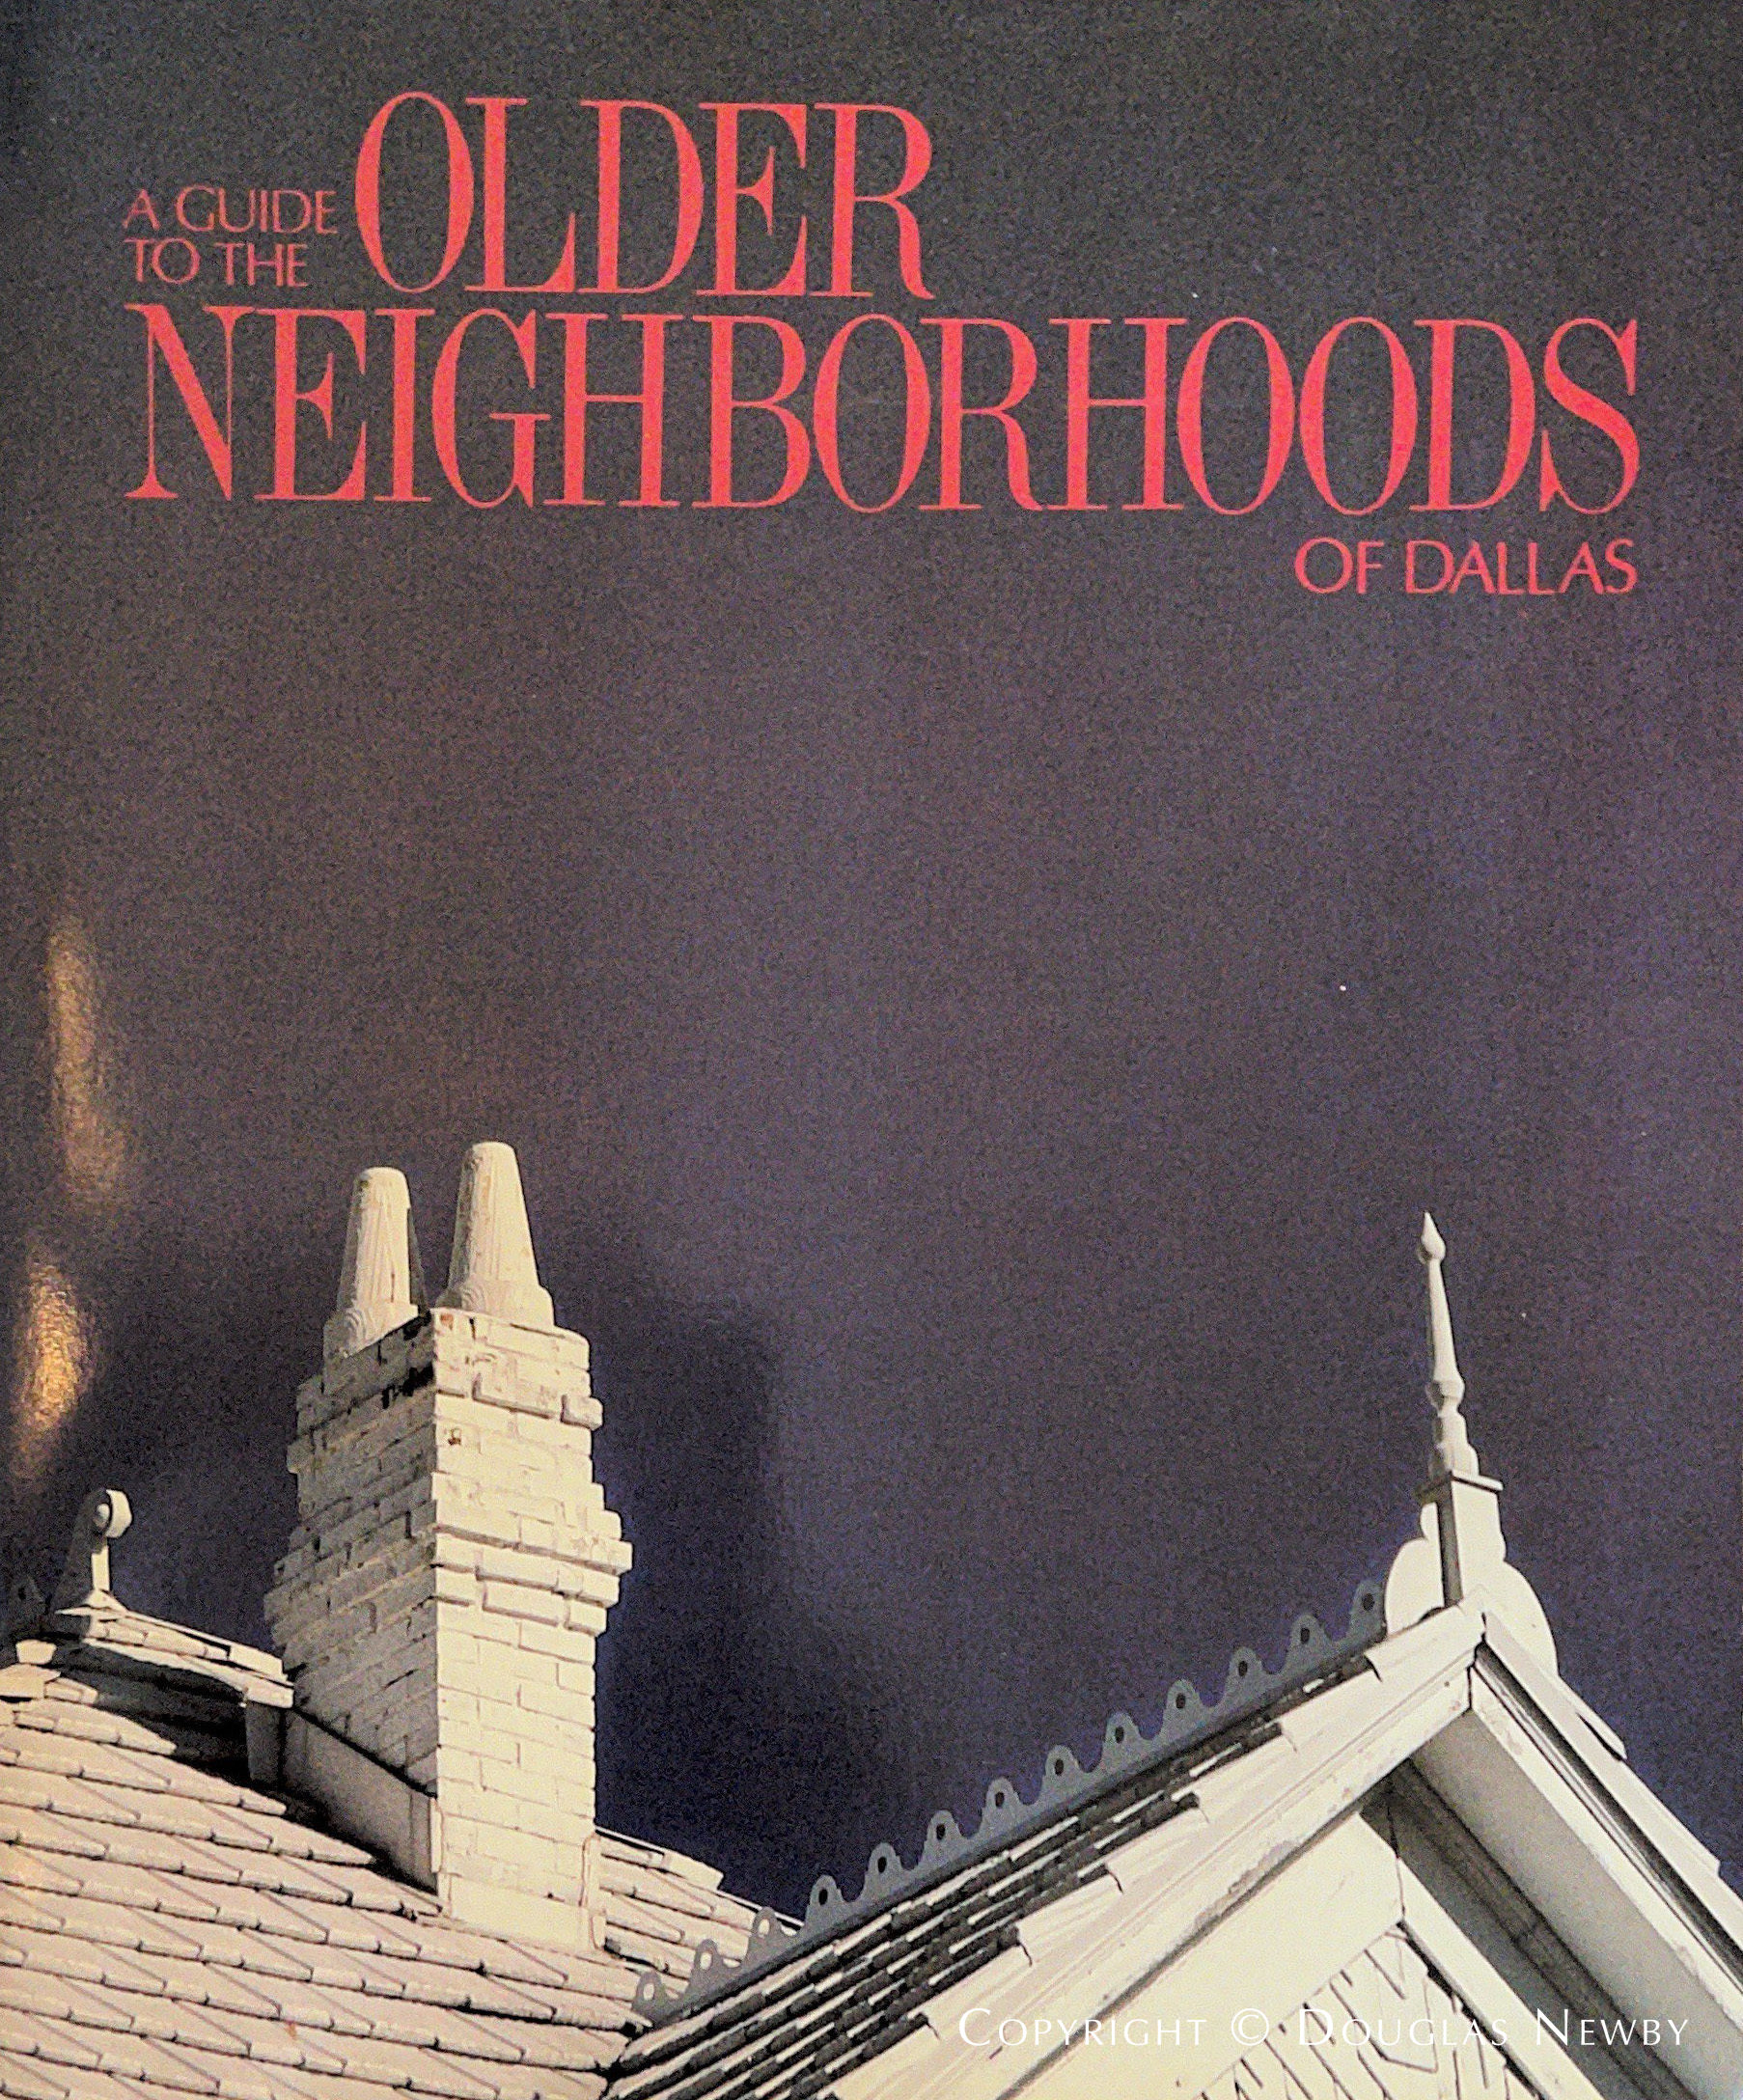 The first book on Dallas Neighborhoods, Principal Writer Douglas Newby